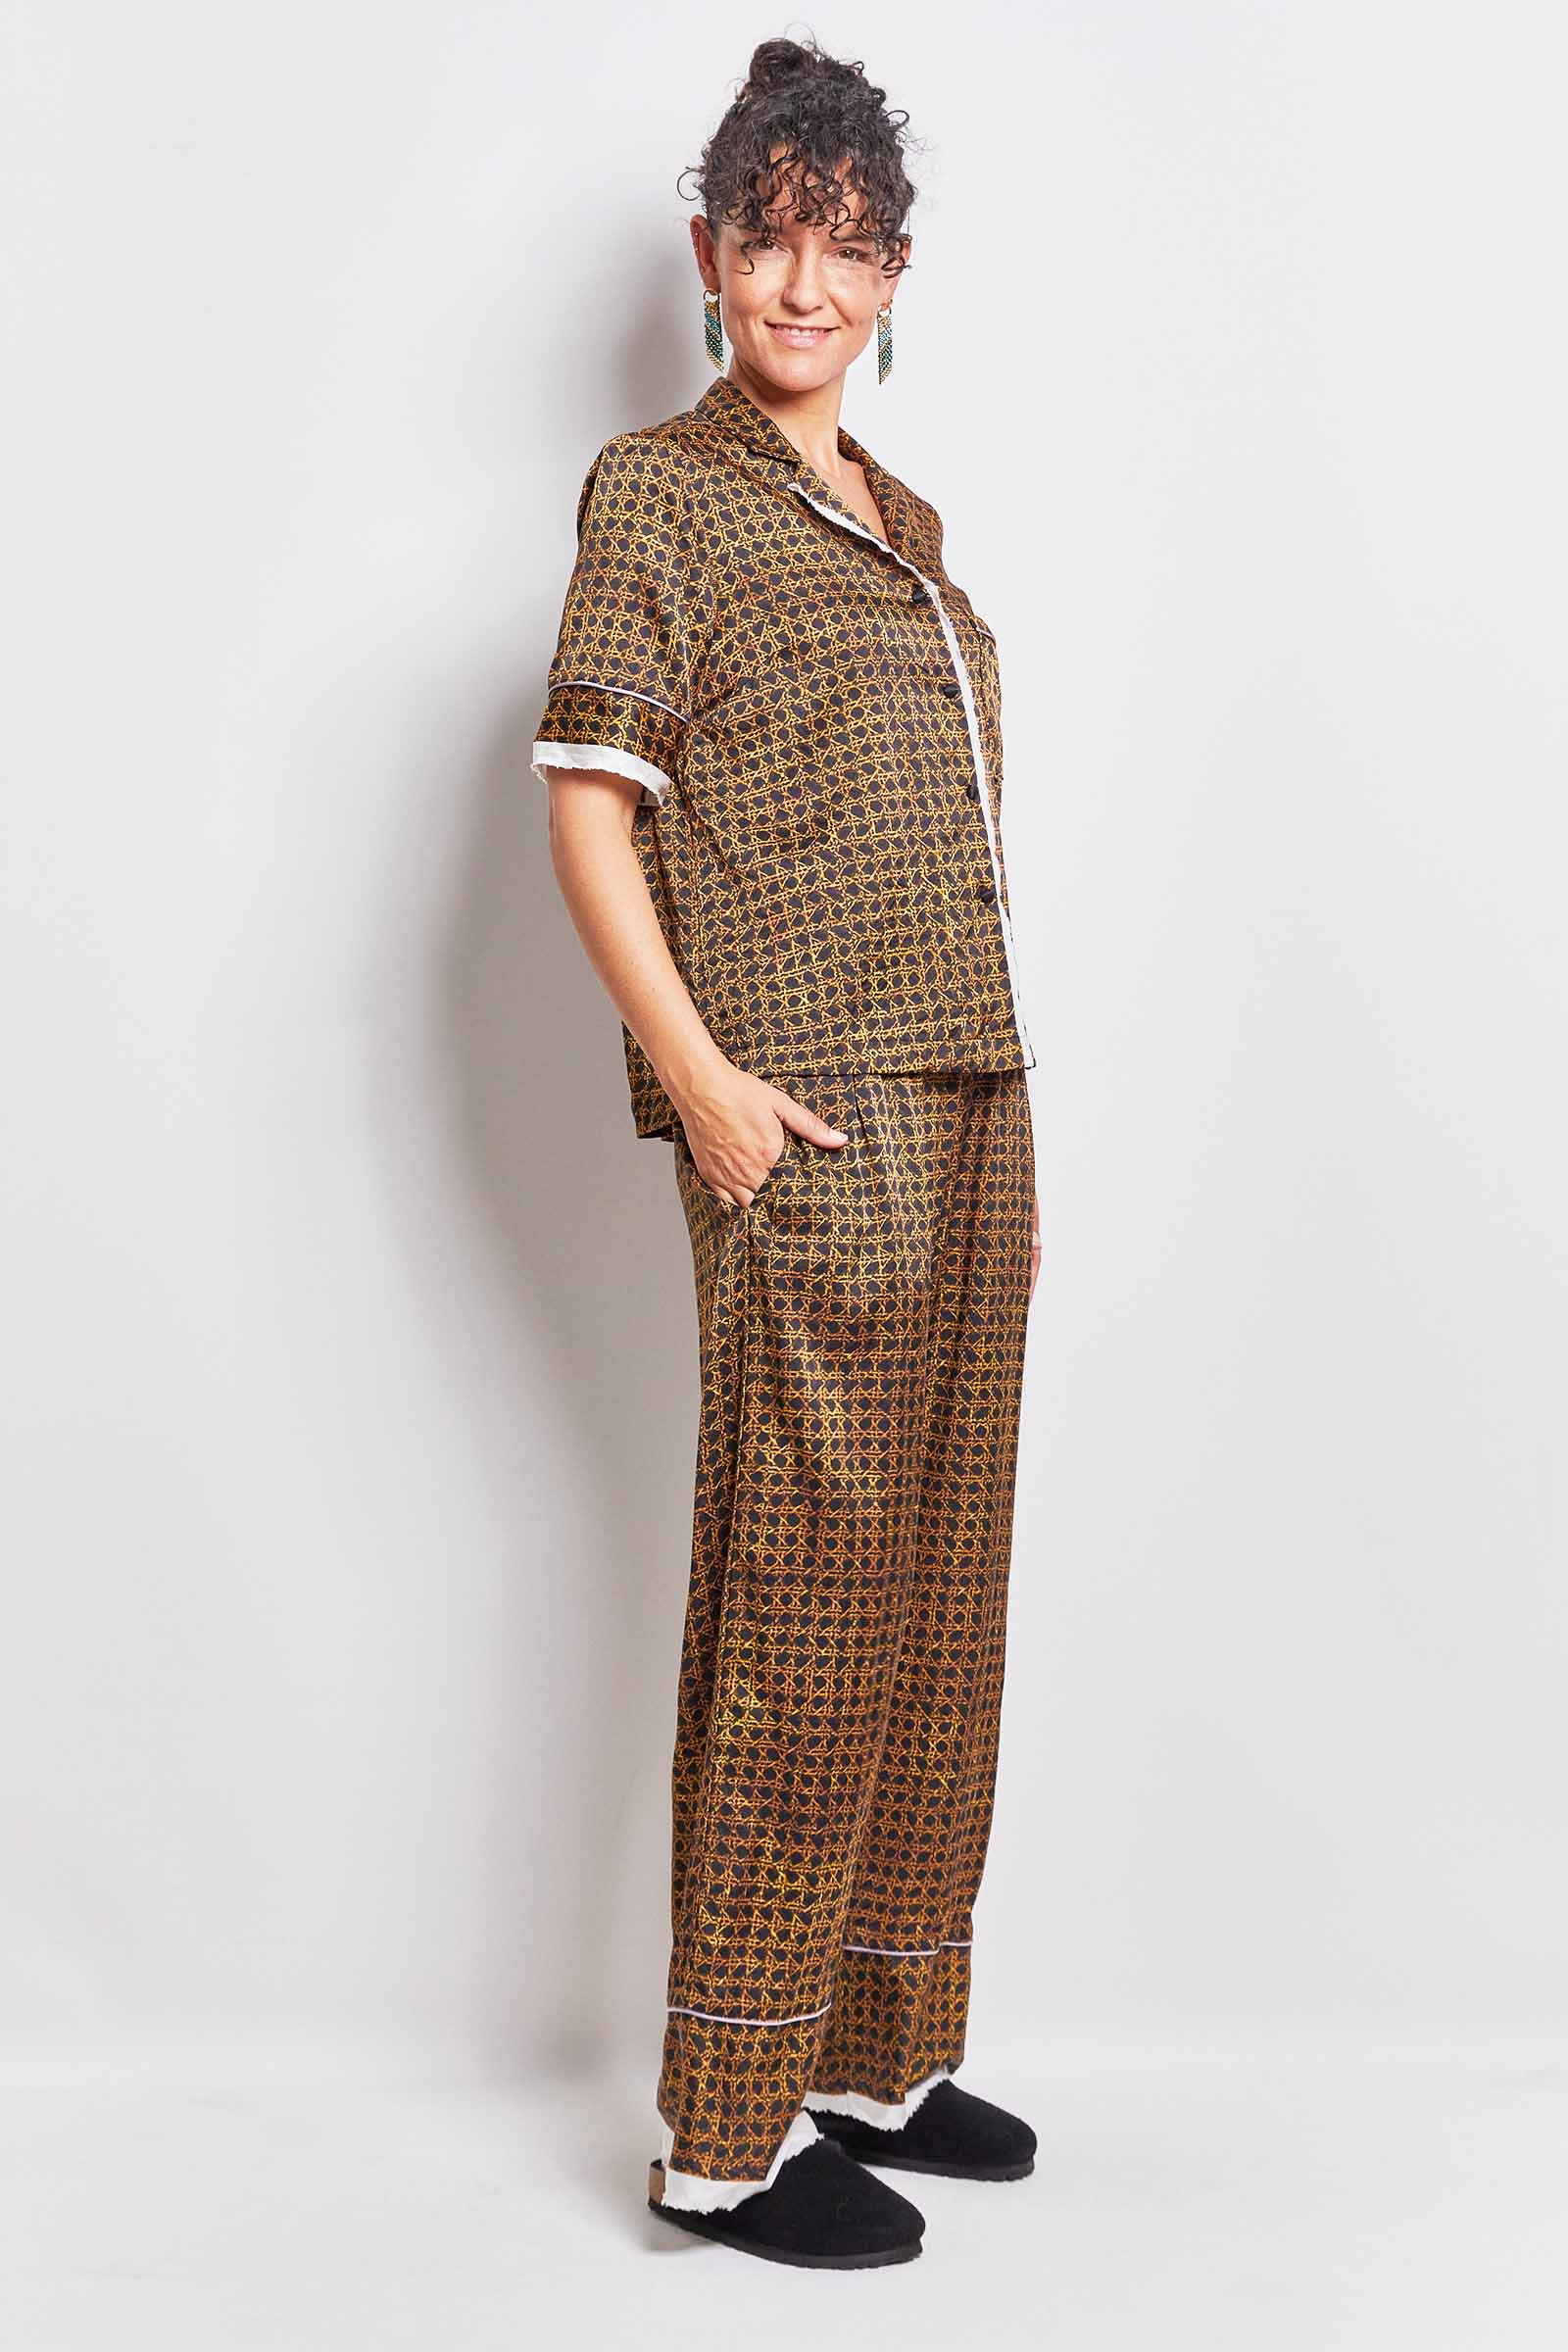 byfreer's silk printed day pyjama set - the cyril silk shirt.